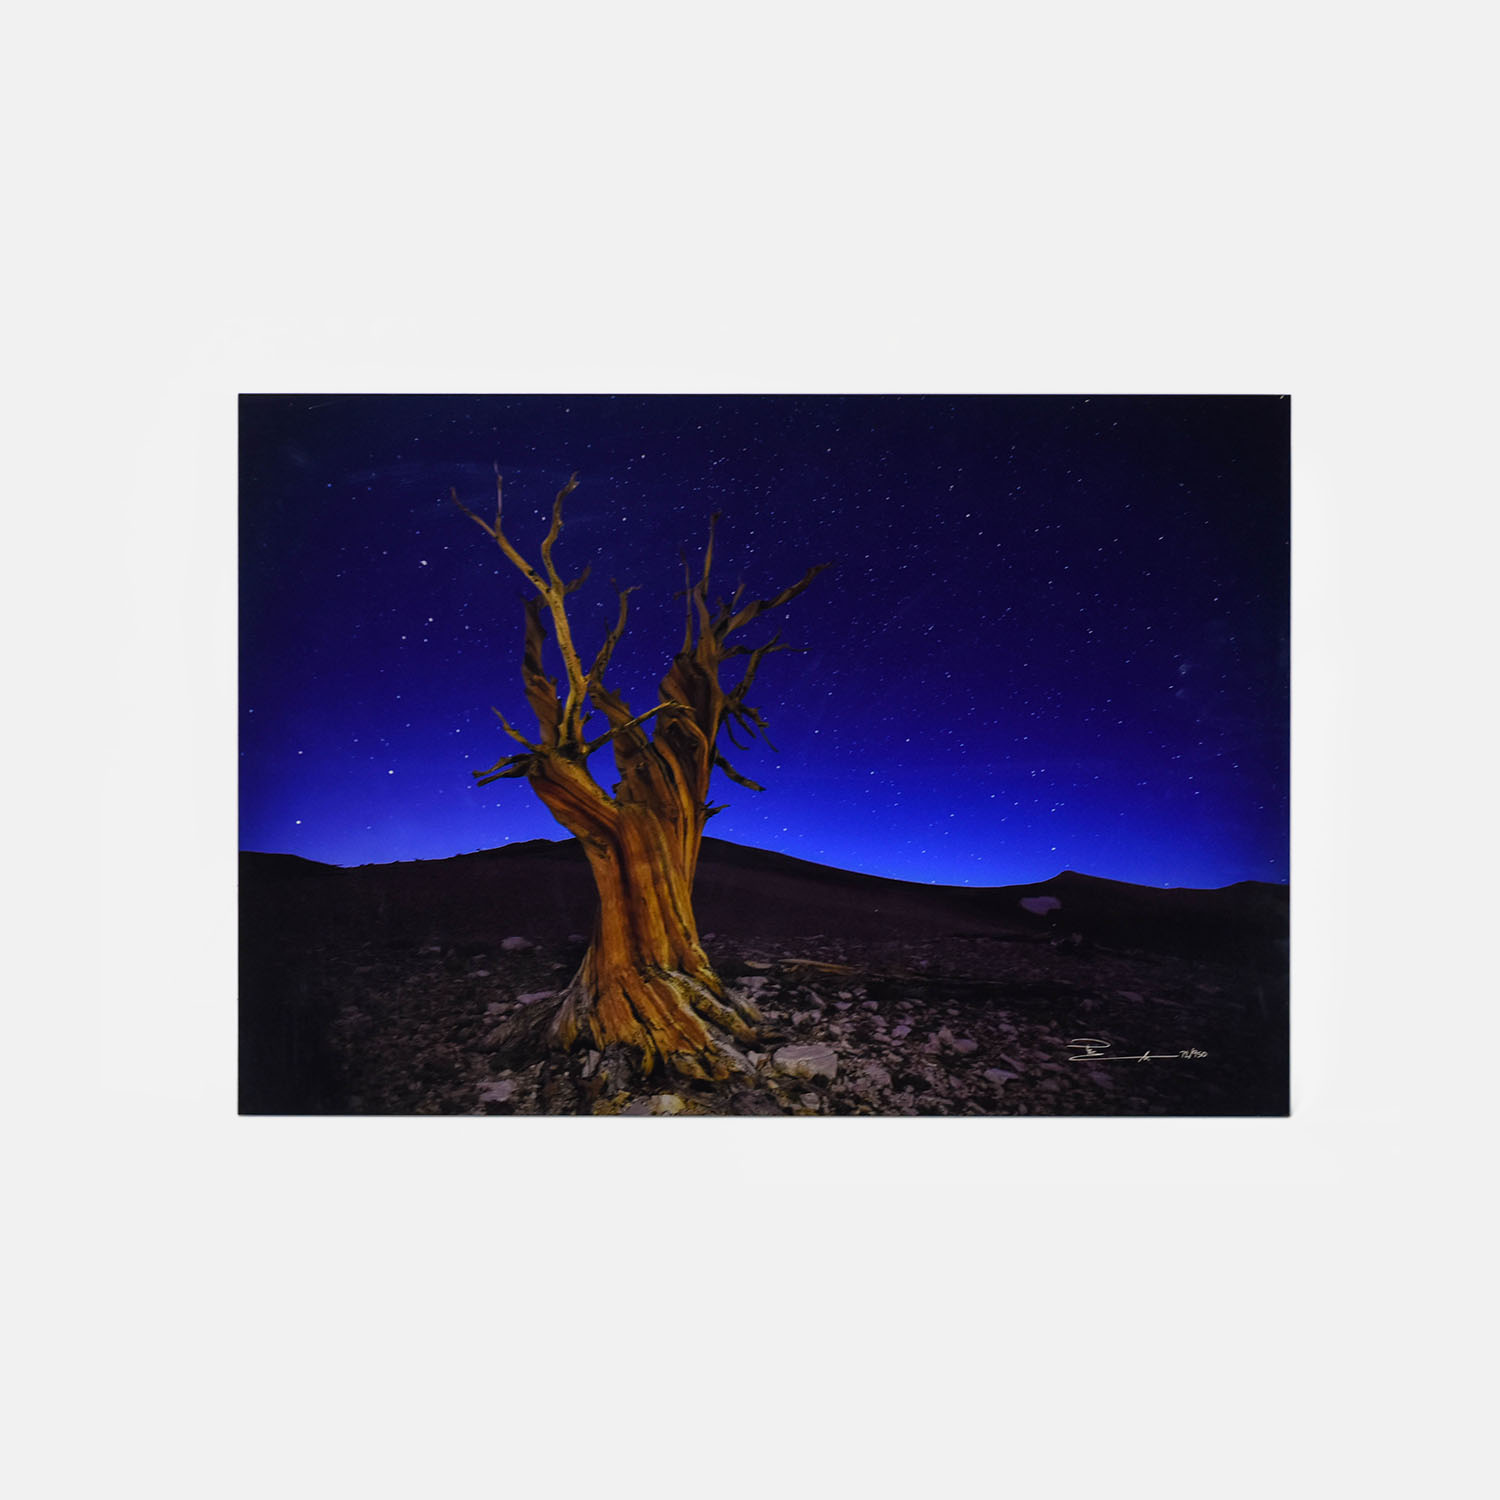 Lik, Peter Photograph on Acrylic Dead Tree at Night 72/950